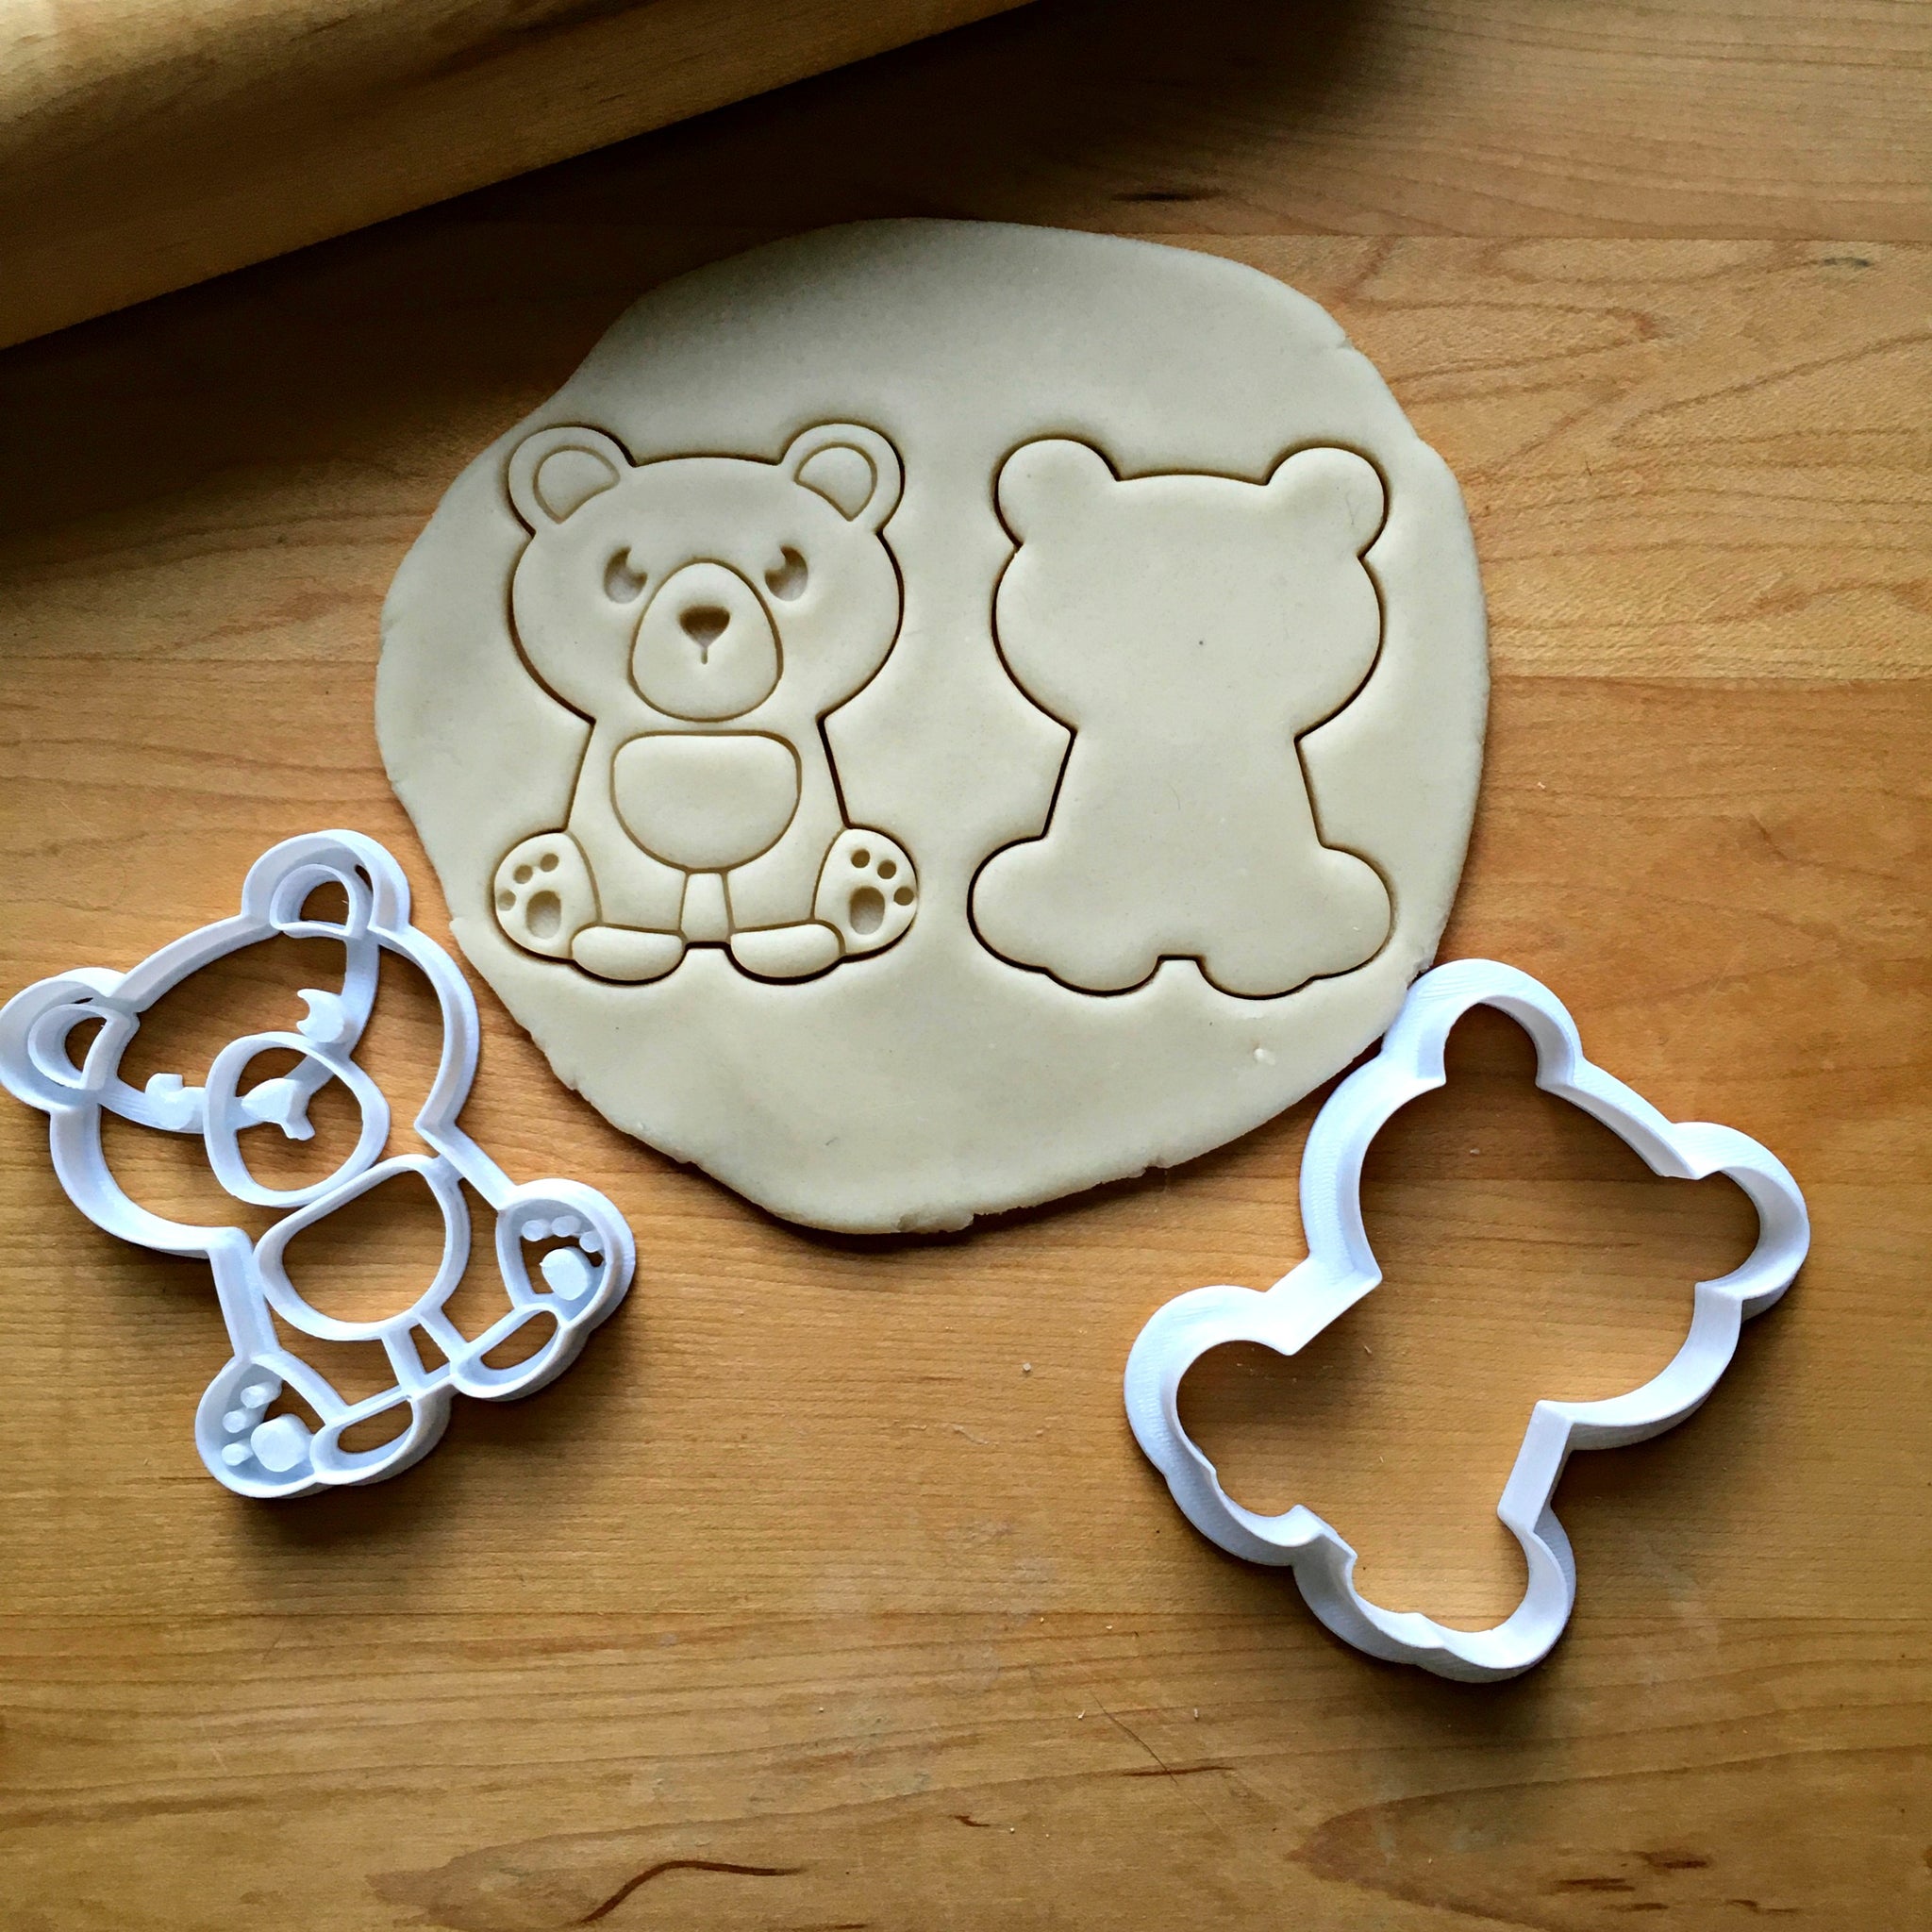 Baby Bear Cookie Cutter/Dishwasher Safe